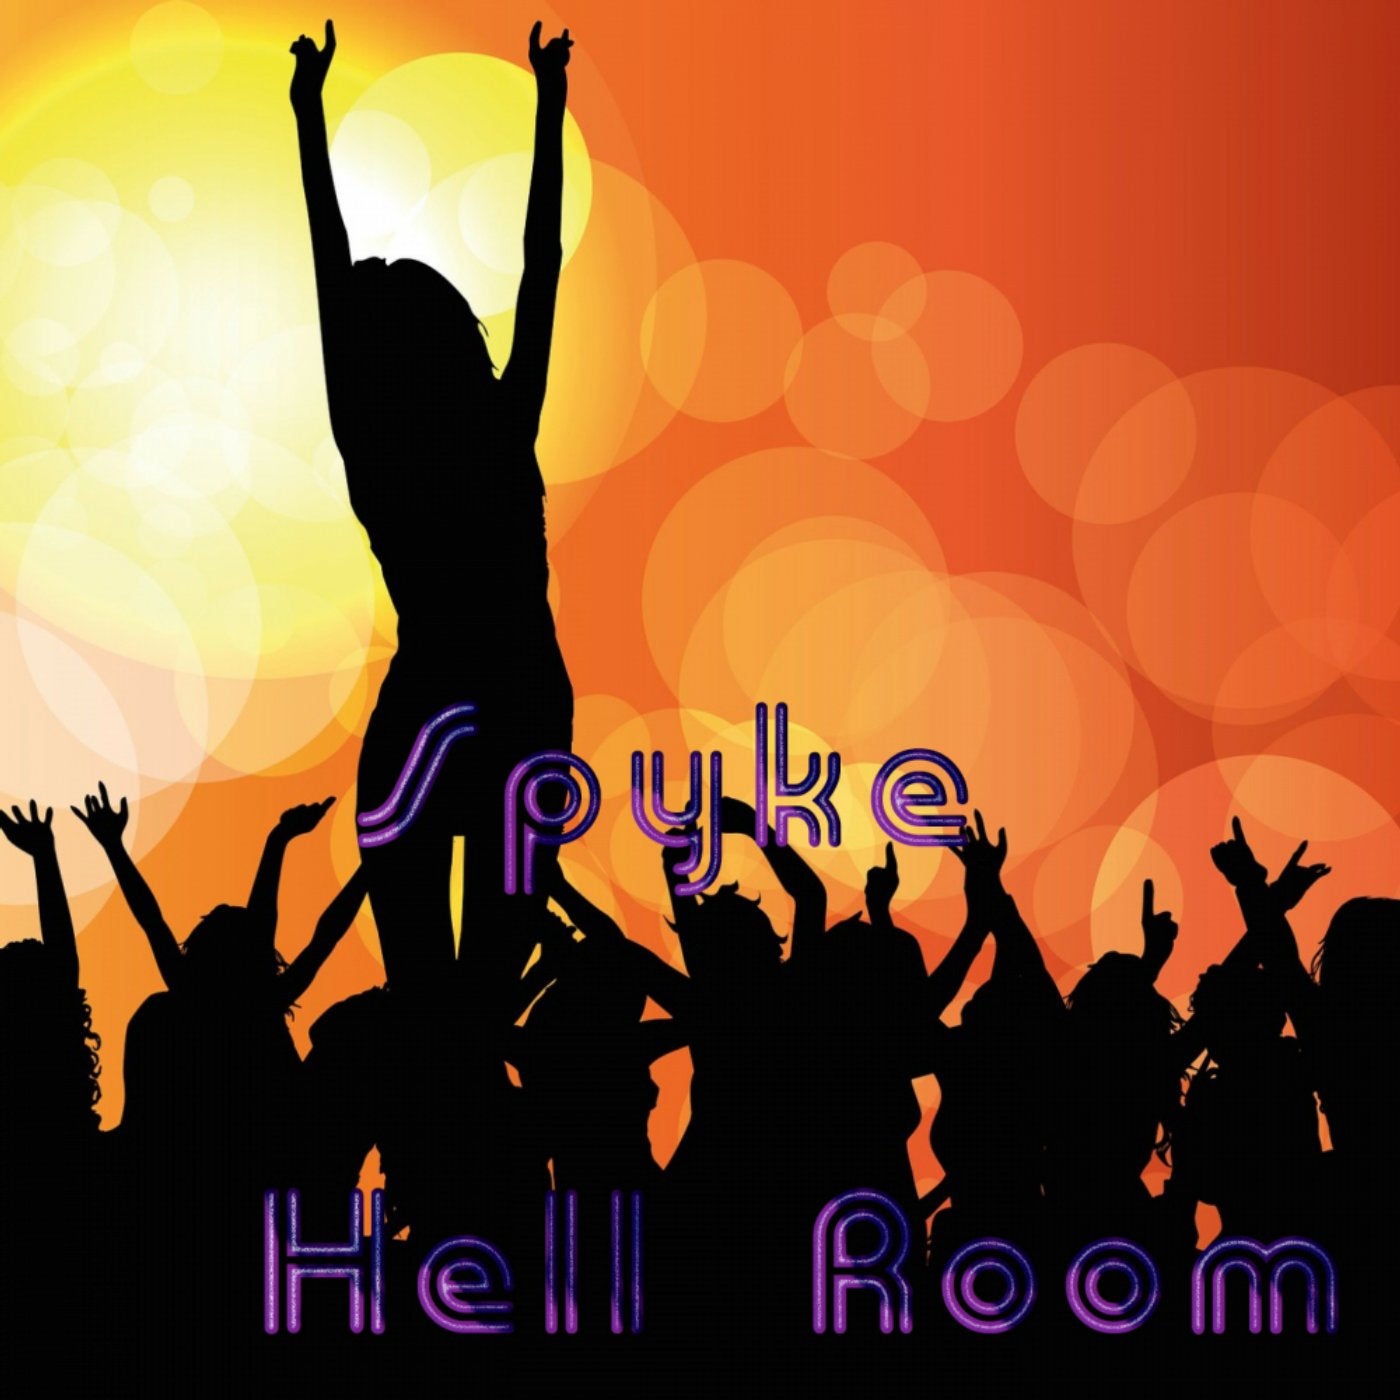 Hell Room